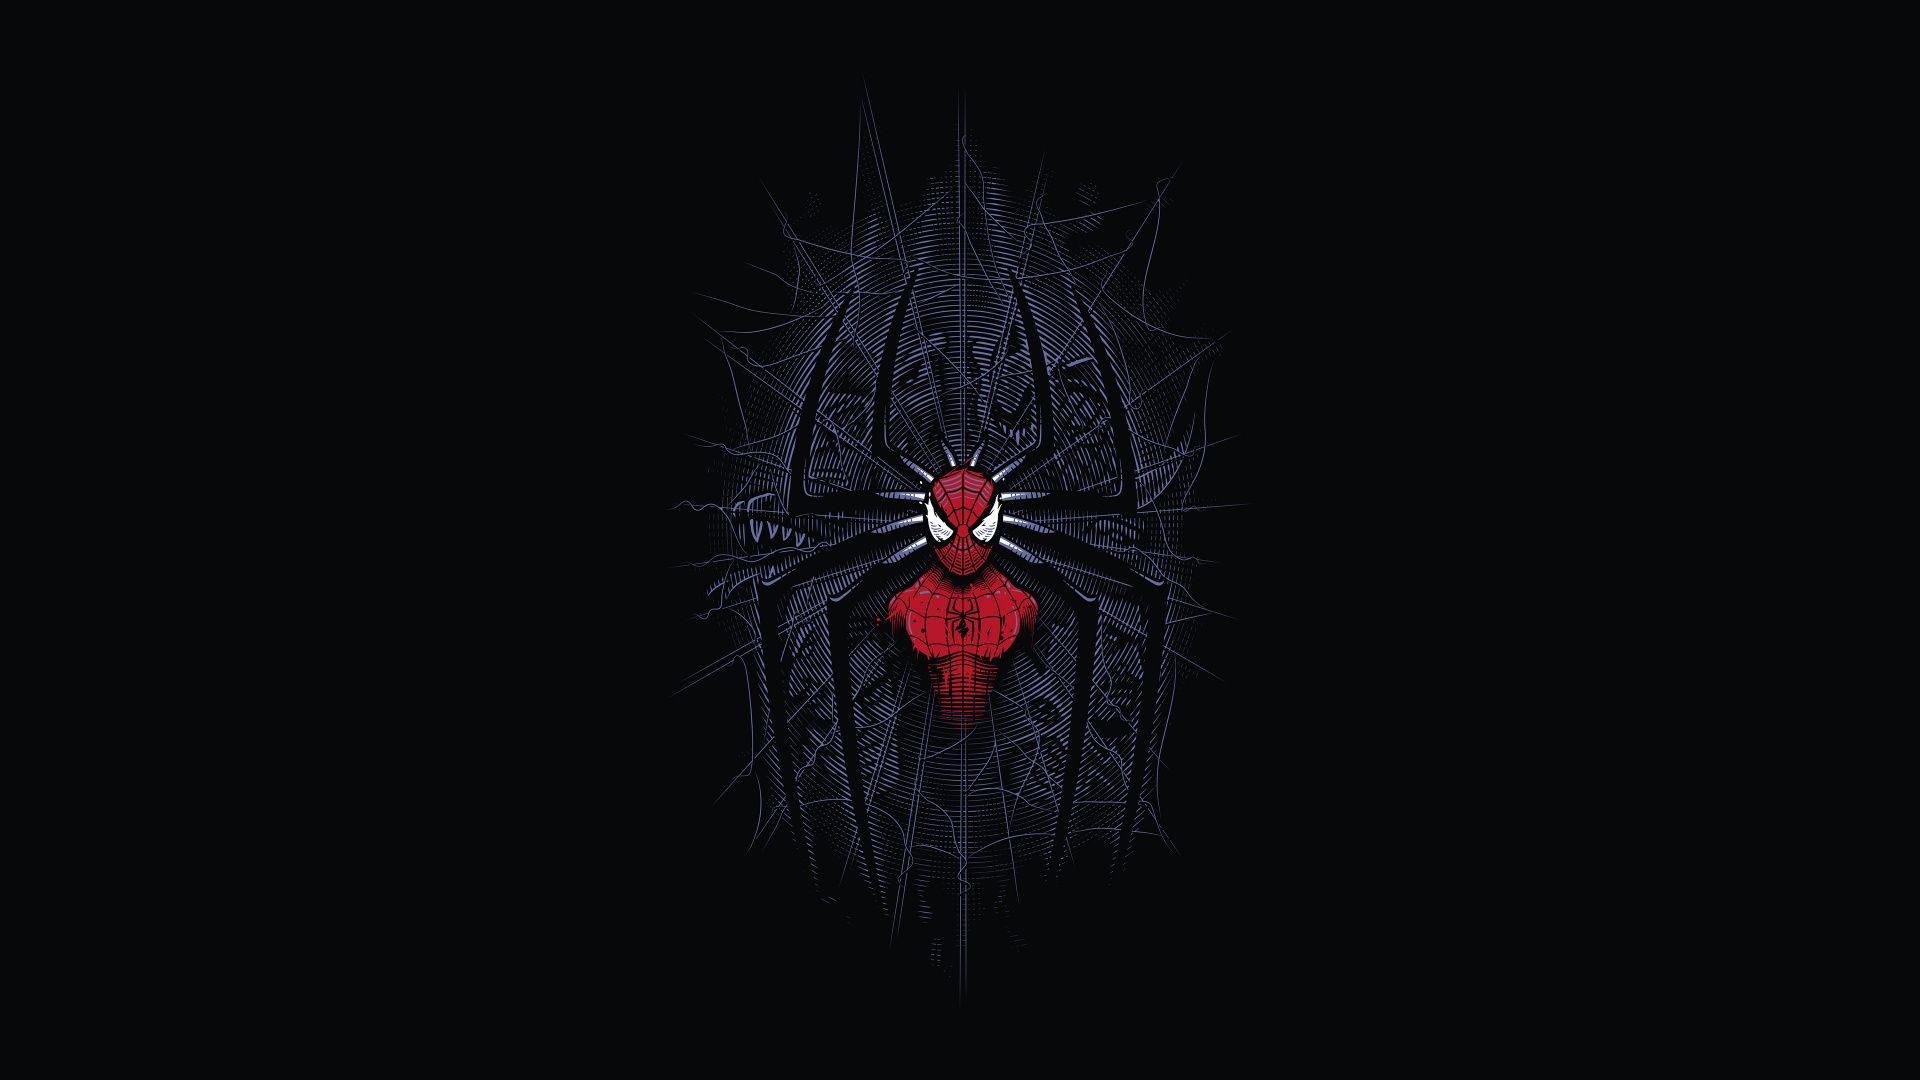 Download 1920x1080 Wallpaper Spider Man, Dark, Minimalist, Digital